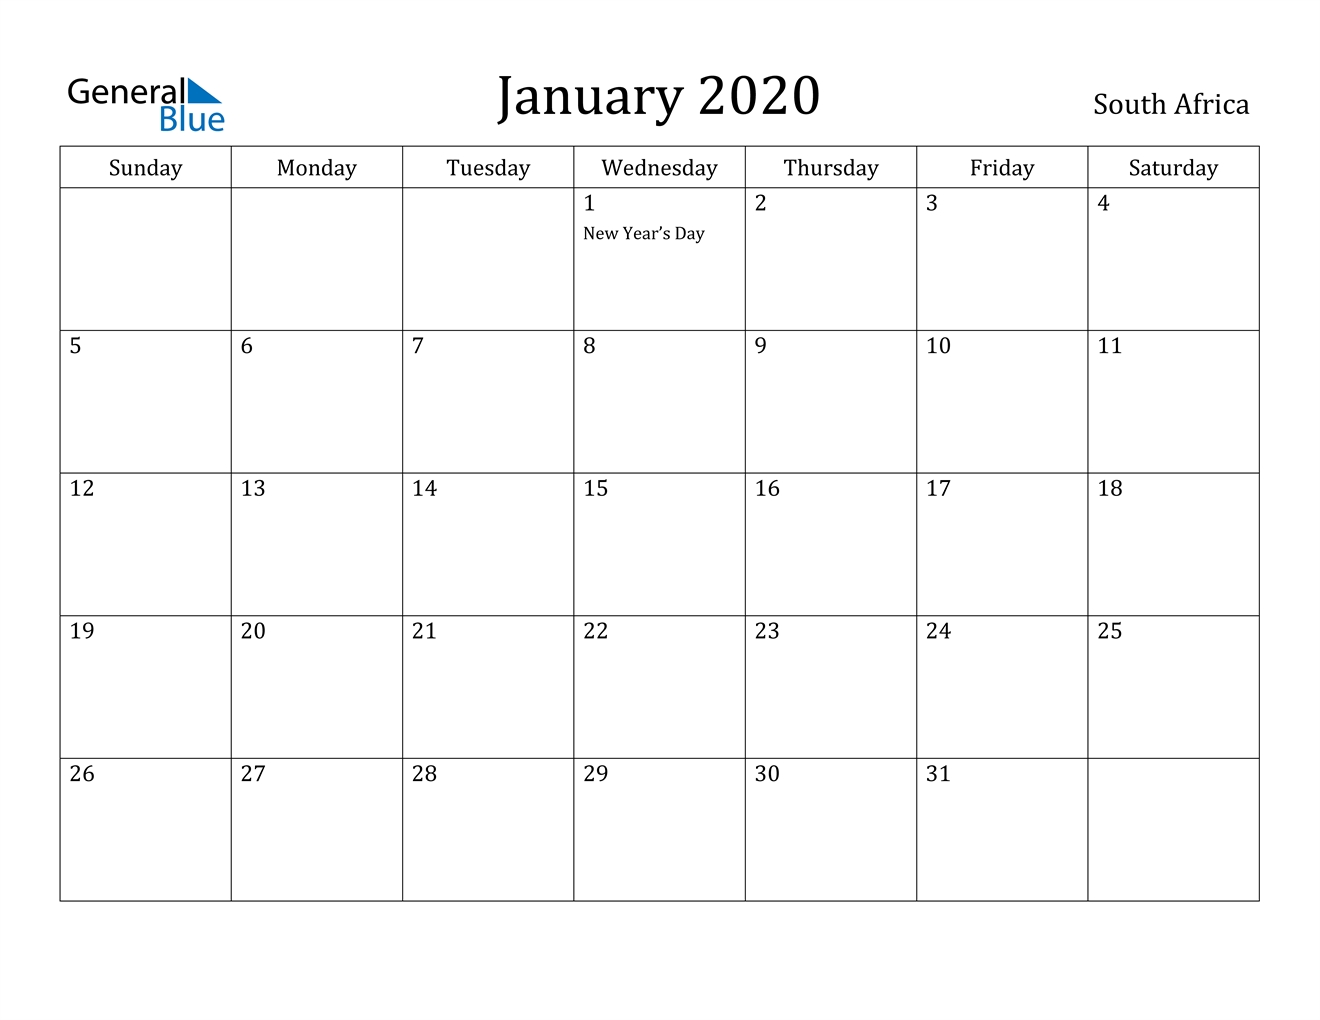 January 2020 Calendar - South Africa Extraordinary Year 2020 Calender - South Africa